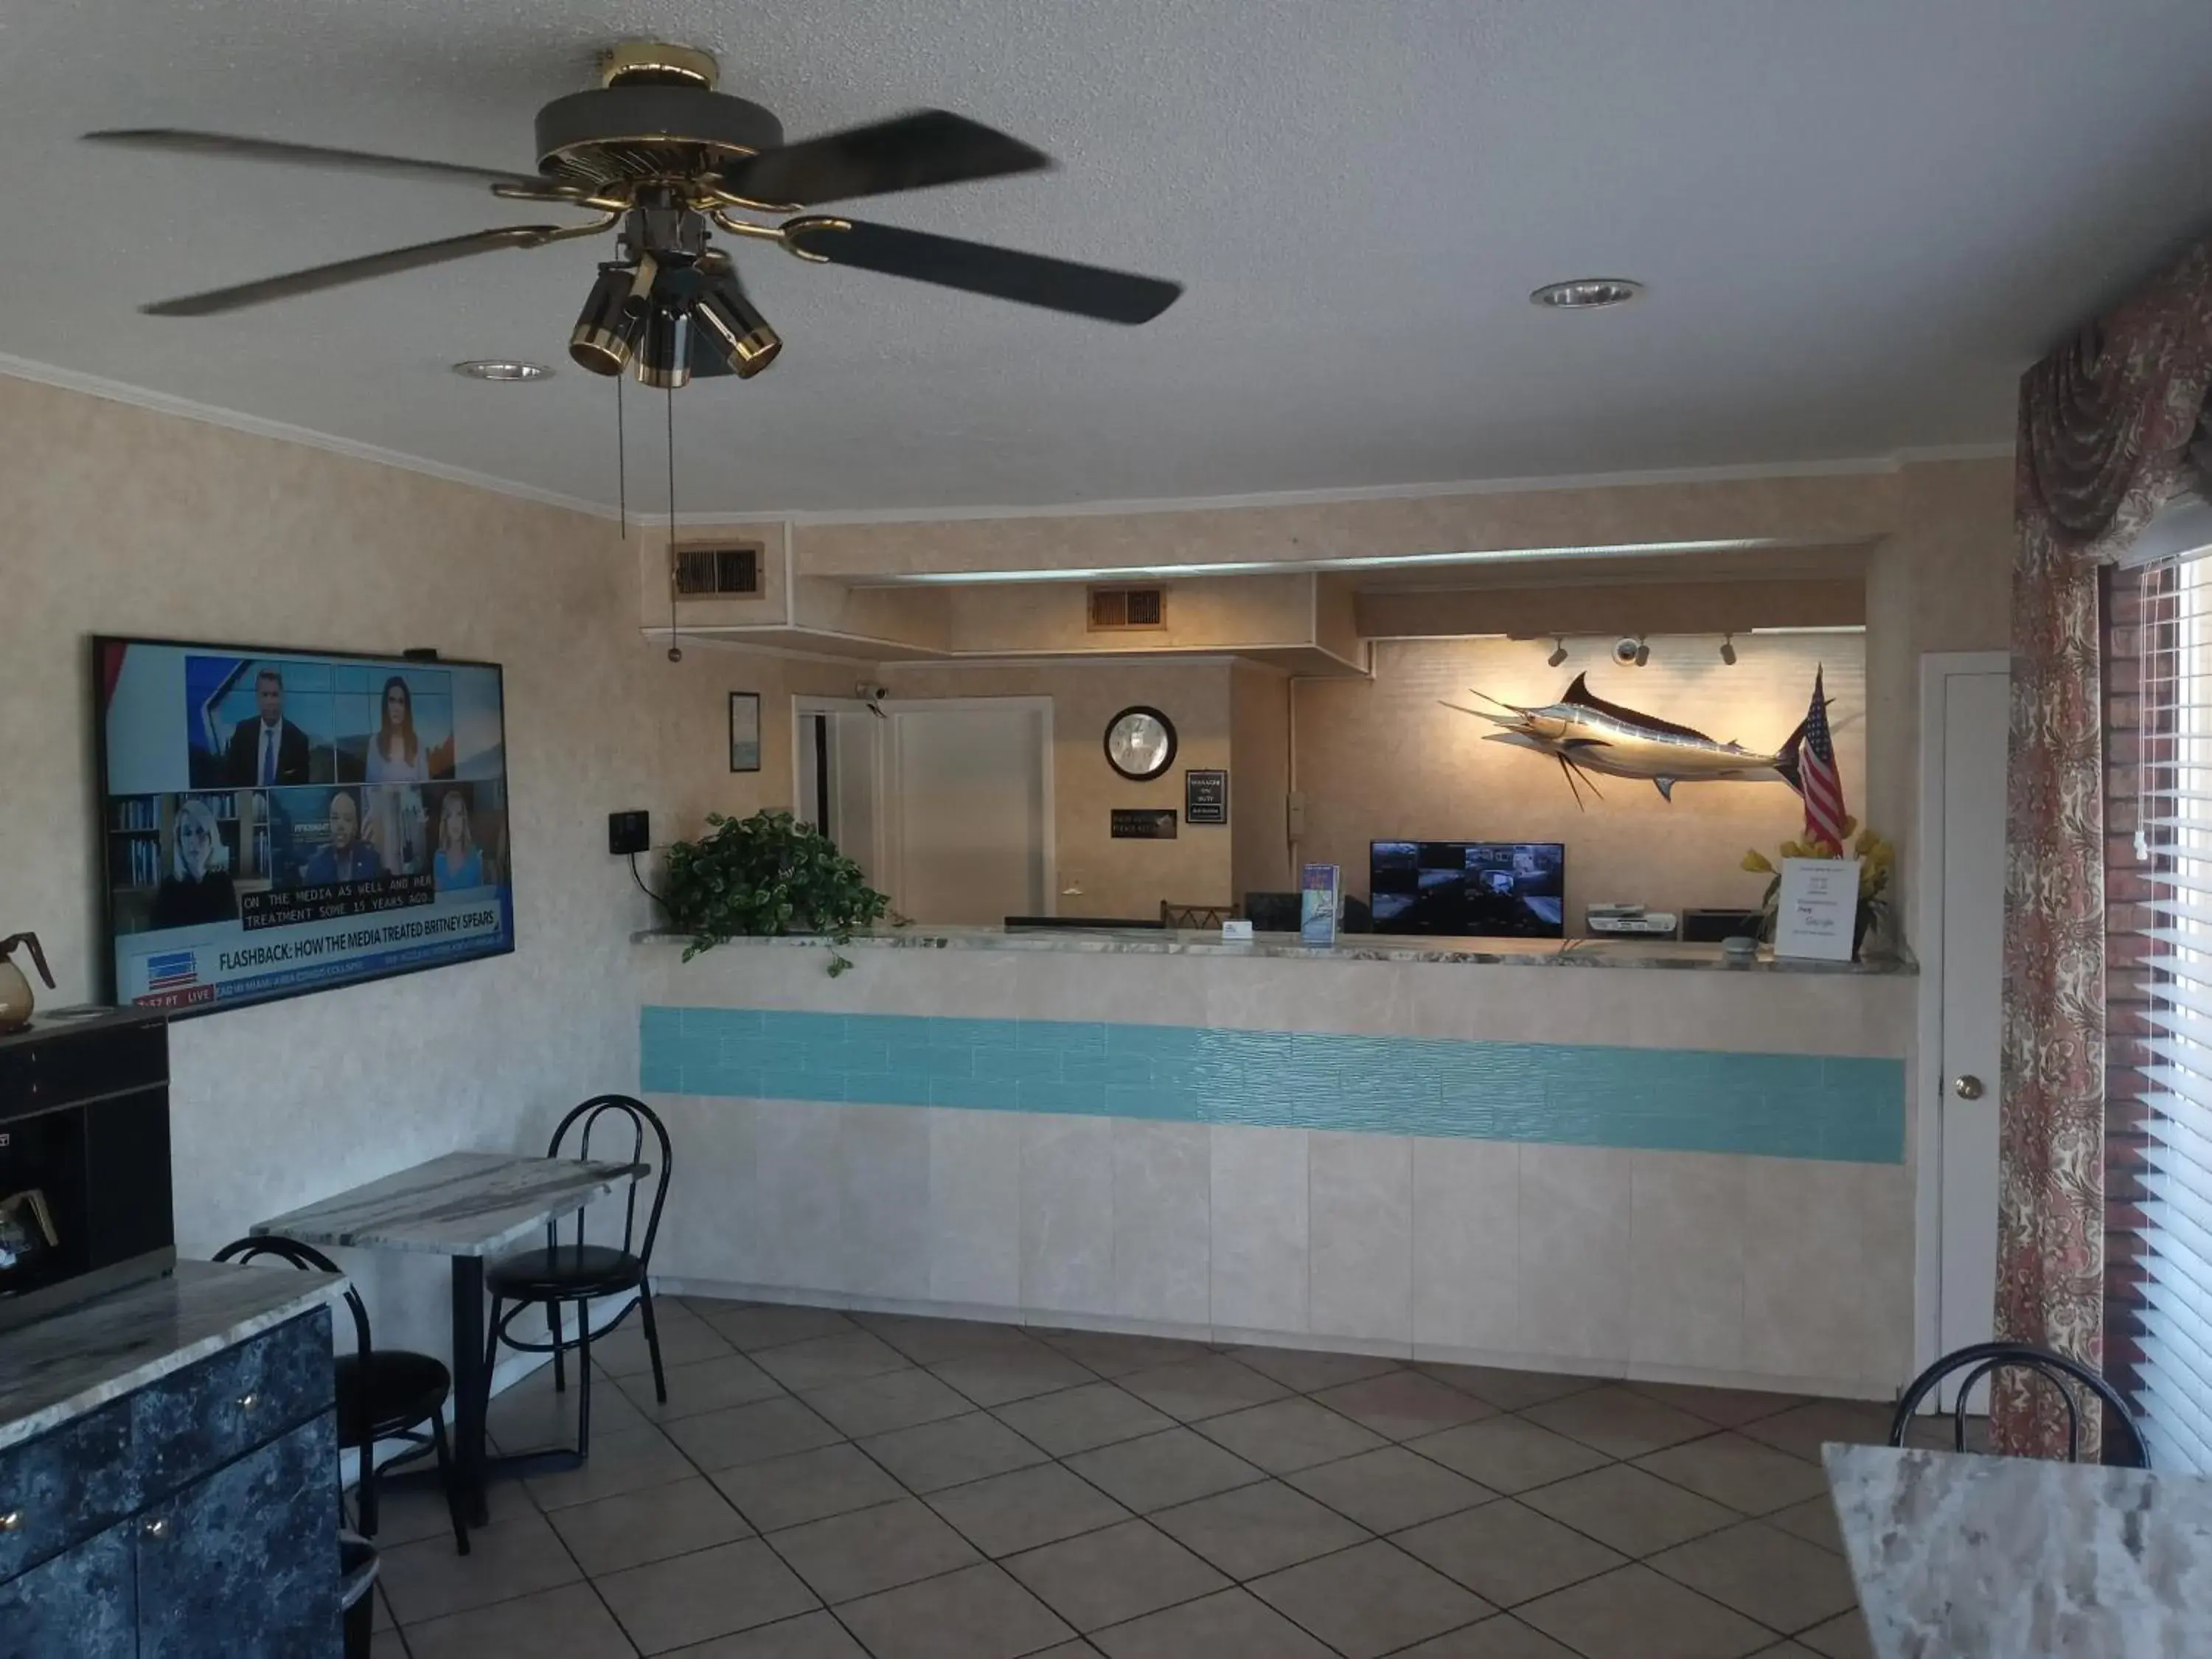 Lobby or reception in Hole Inn the Wall Hotel - Sunset Plaza - Fort Walton Beach